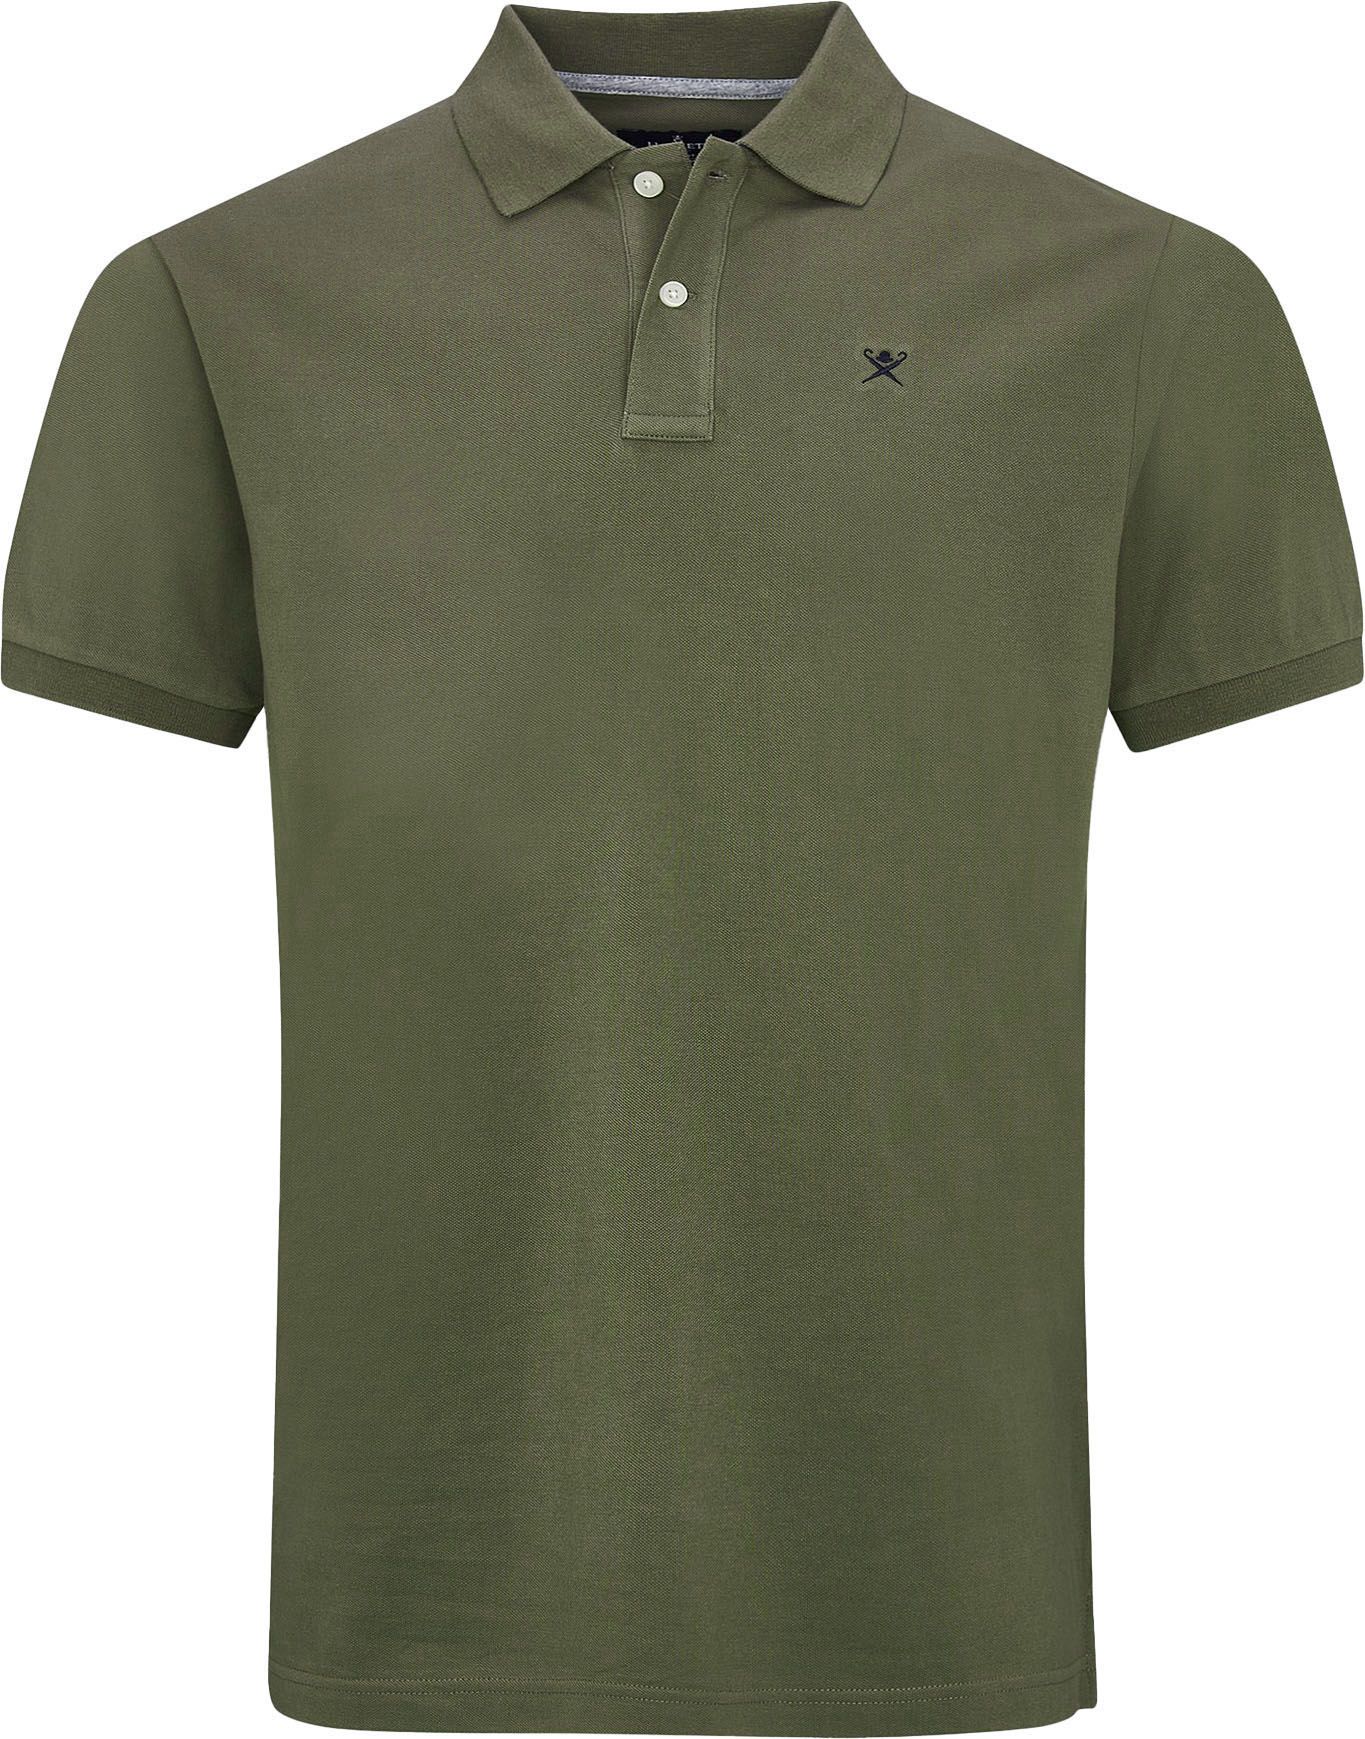 Hackett Polo Shirt Olive Green Dark Green size M